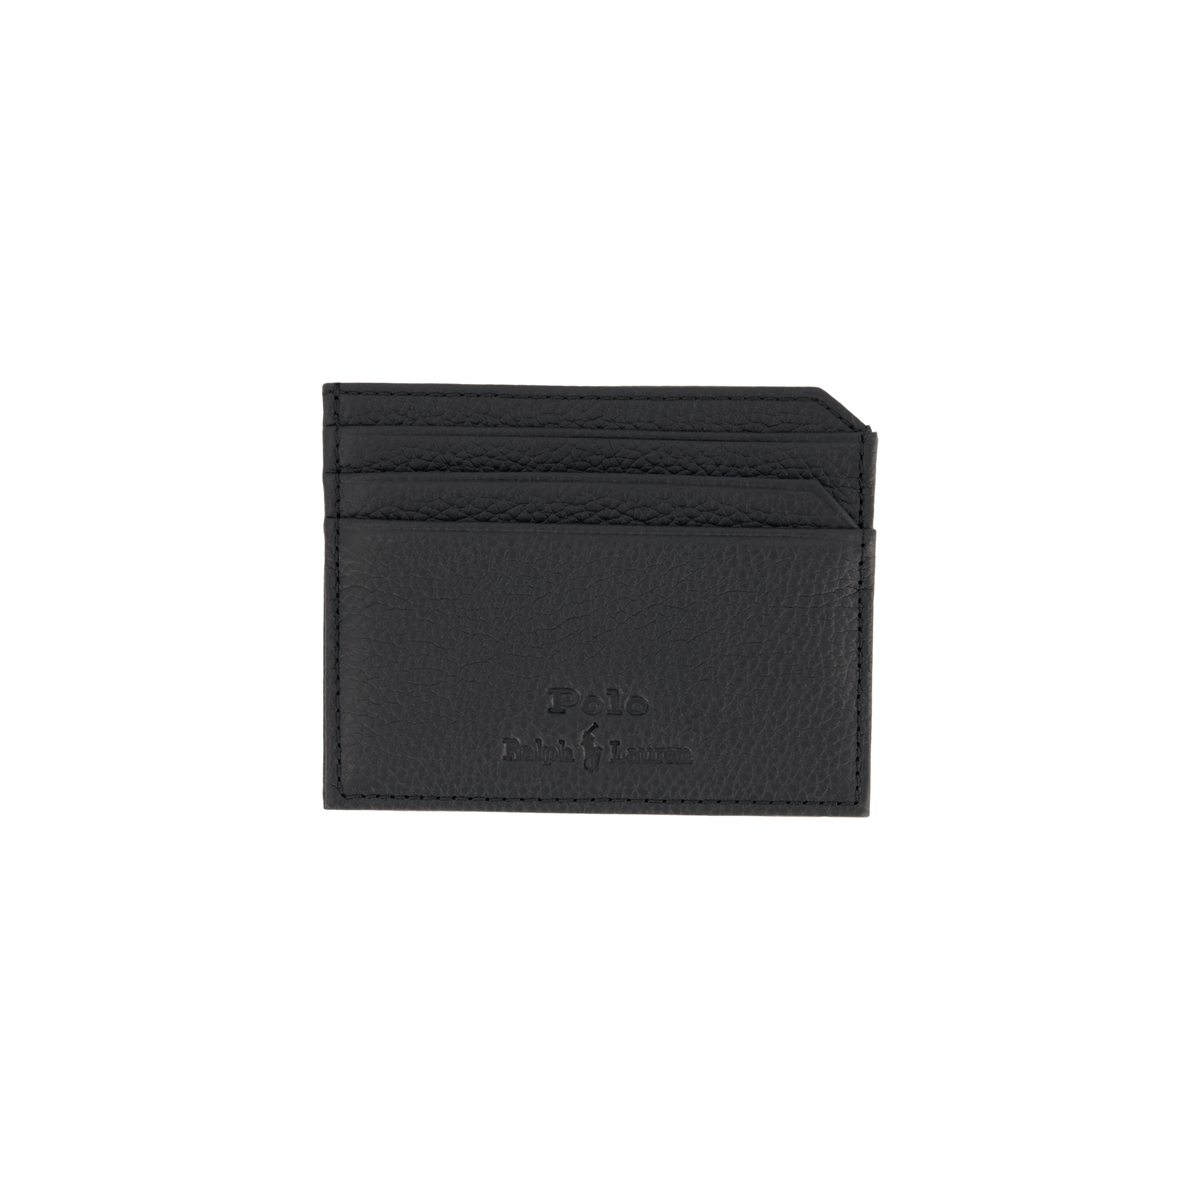 Polo Ralph Lauren Pebble Leather Card Case 001